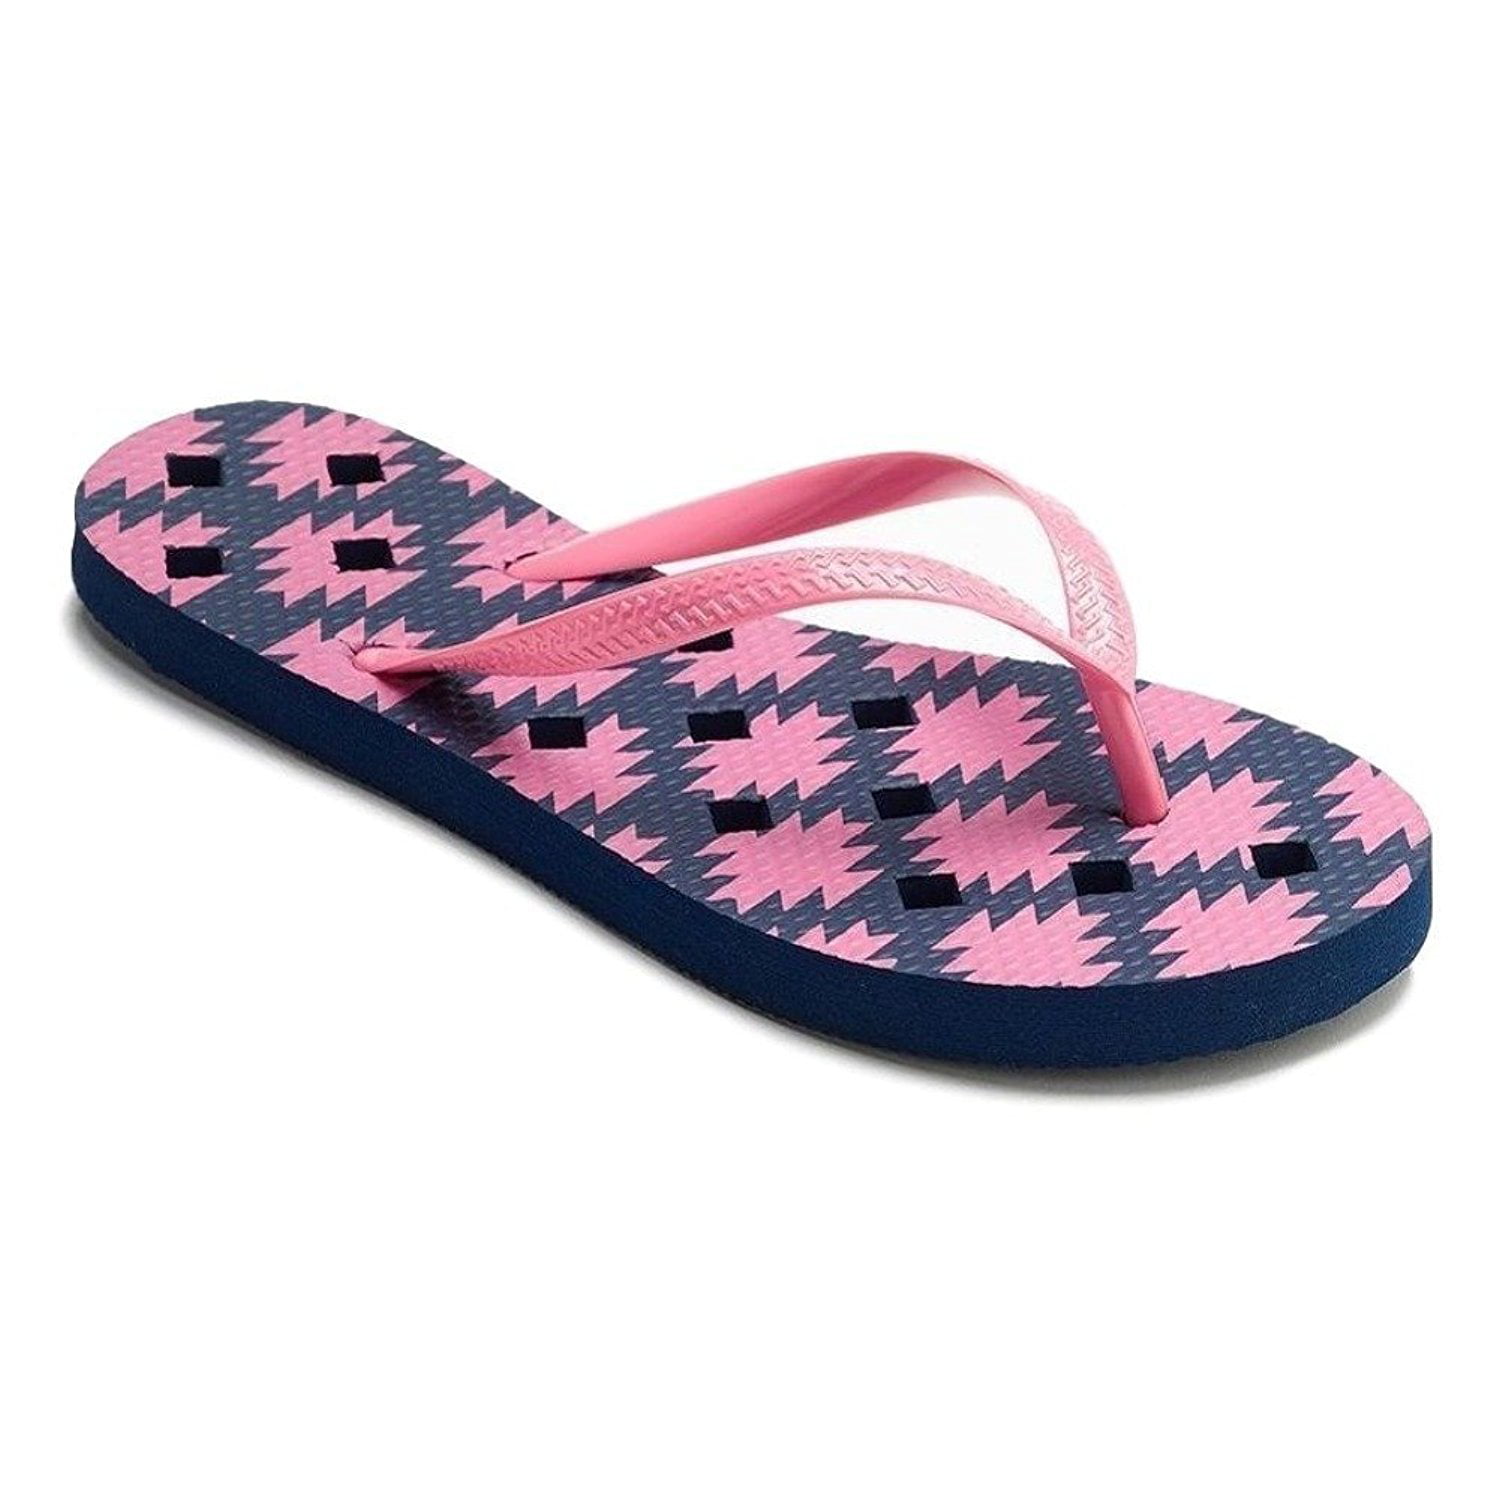 Lplpol ff Cows Flip Flops for Kids Adult Beach Sandals Pool Shoes Party Slippers Black Pink Blue Belt for Chosen